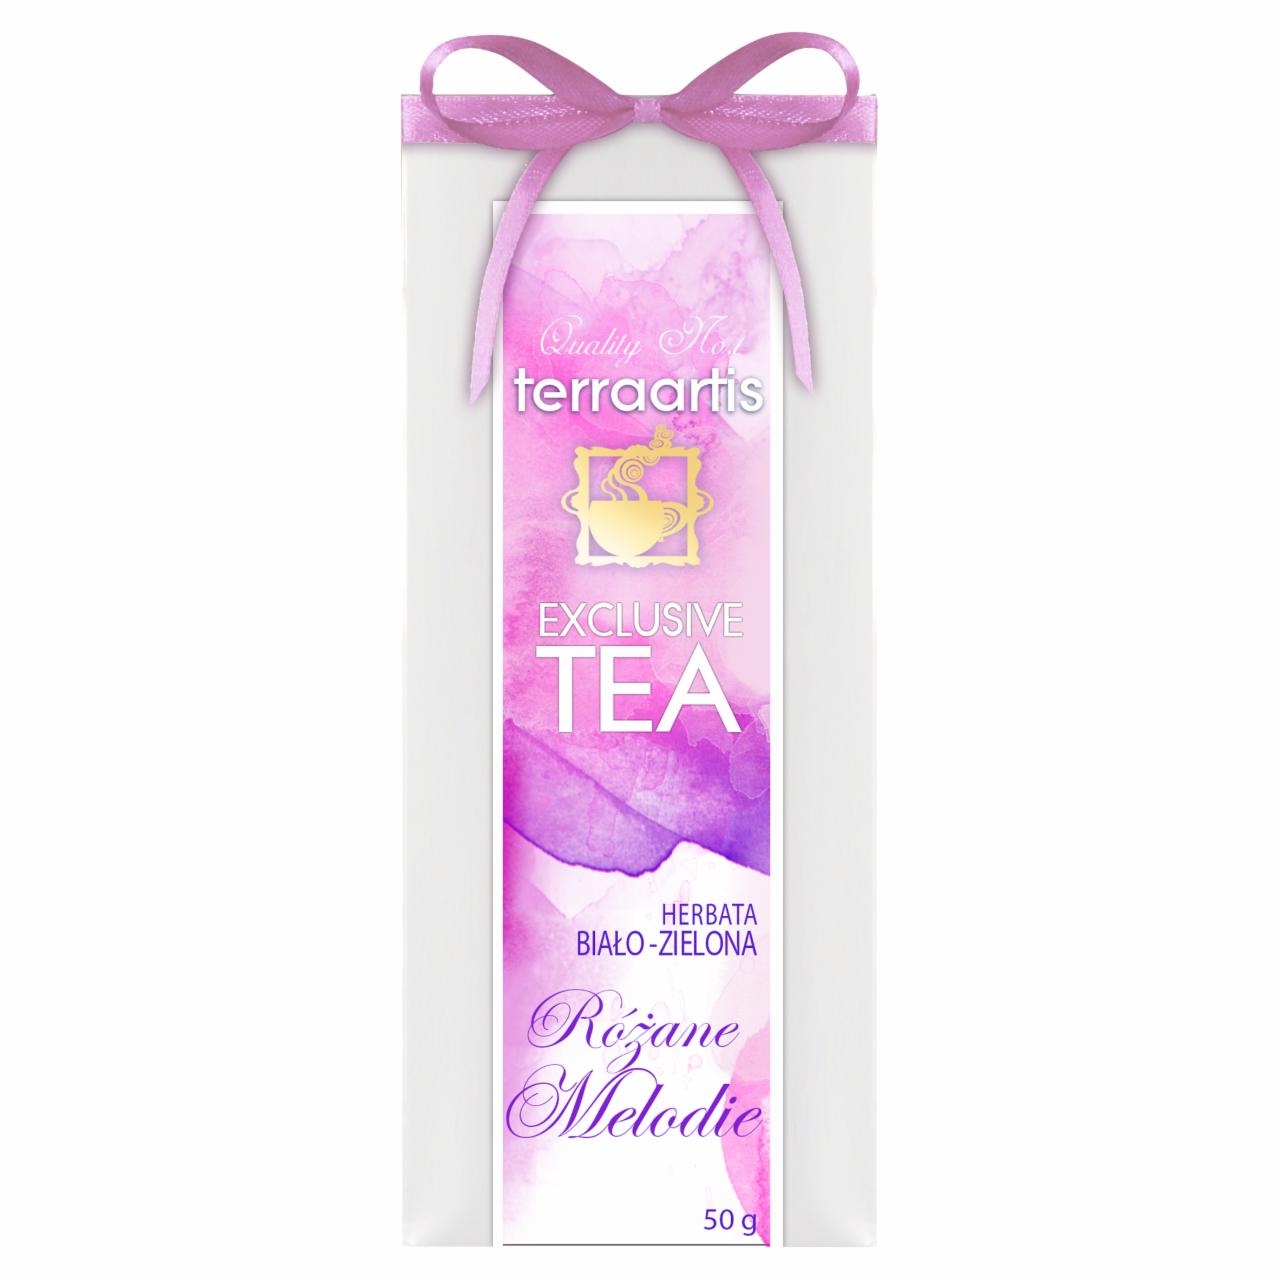 Zdjęcia - Terraartis Exclusive Tea Herbata biało-zielona różane melodie 50 g